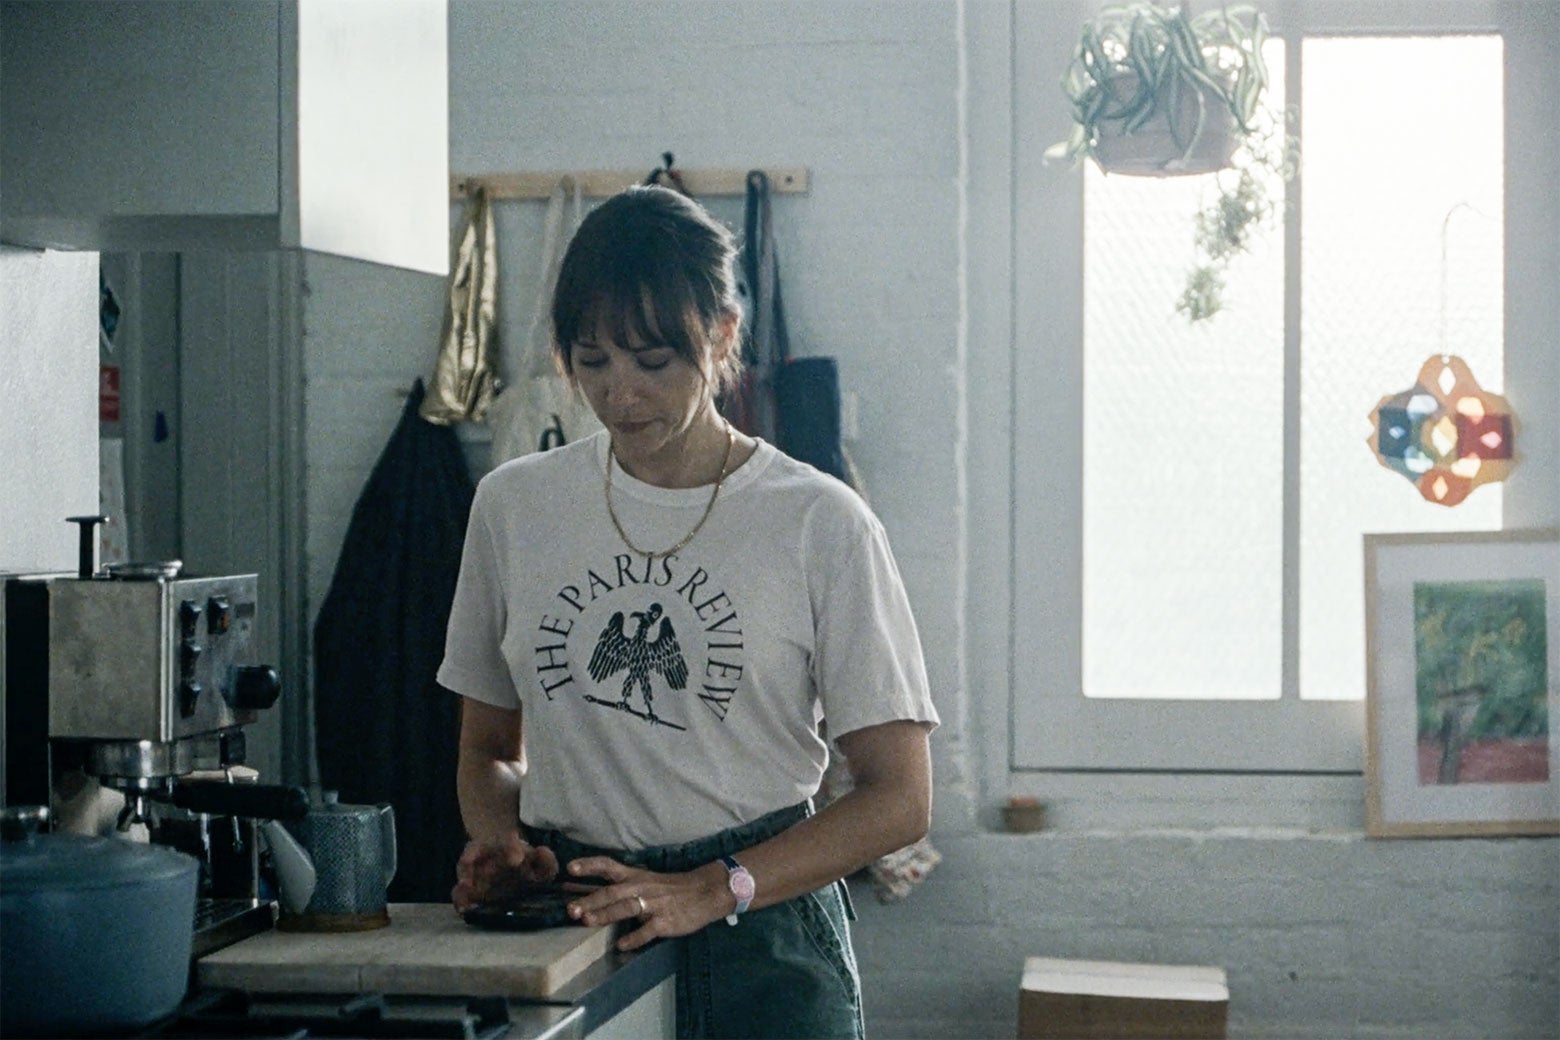 Rashida Jones stands in her light-filled kitchen, wearing a Paris Review T-shirt